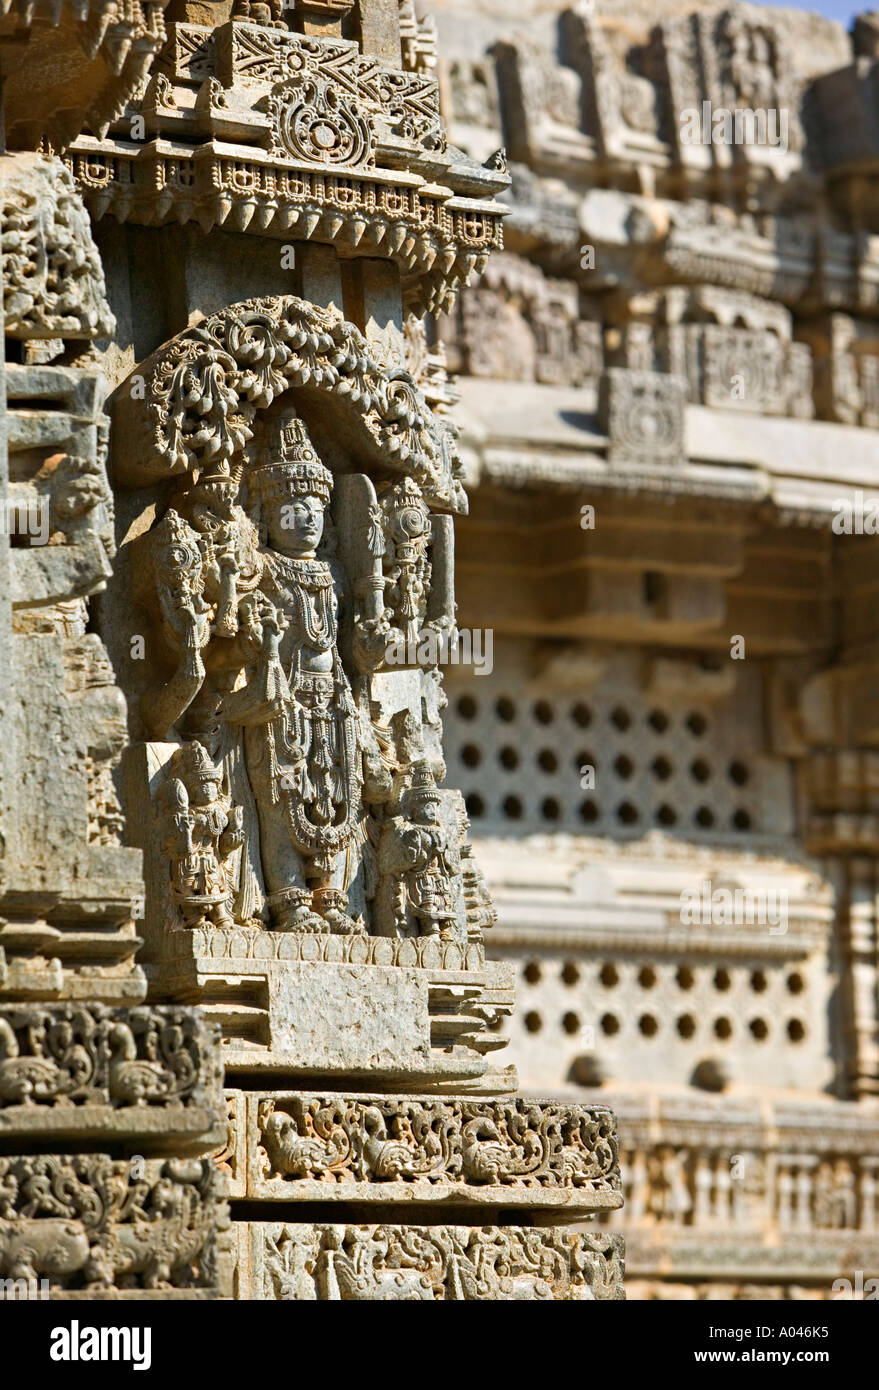 Keshava (Hoysala) Templo, Somnathpur, Karnataka, India Foto de stock